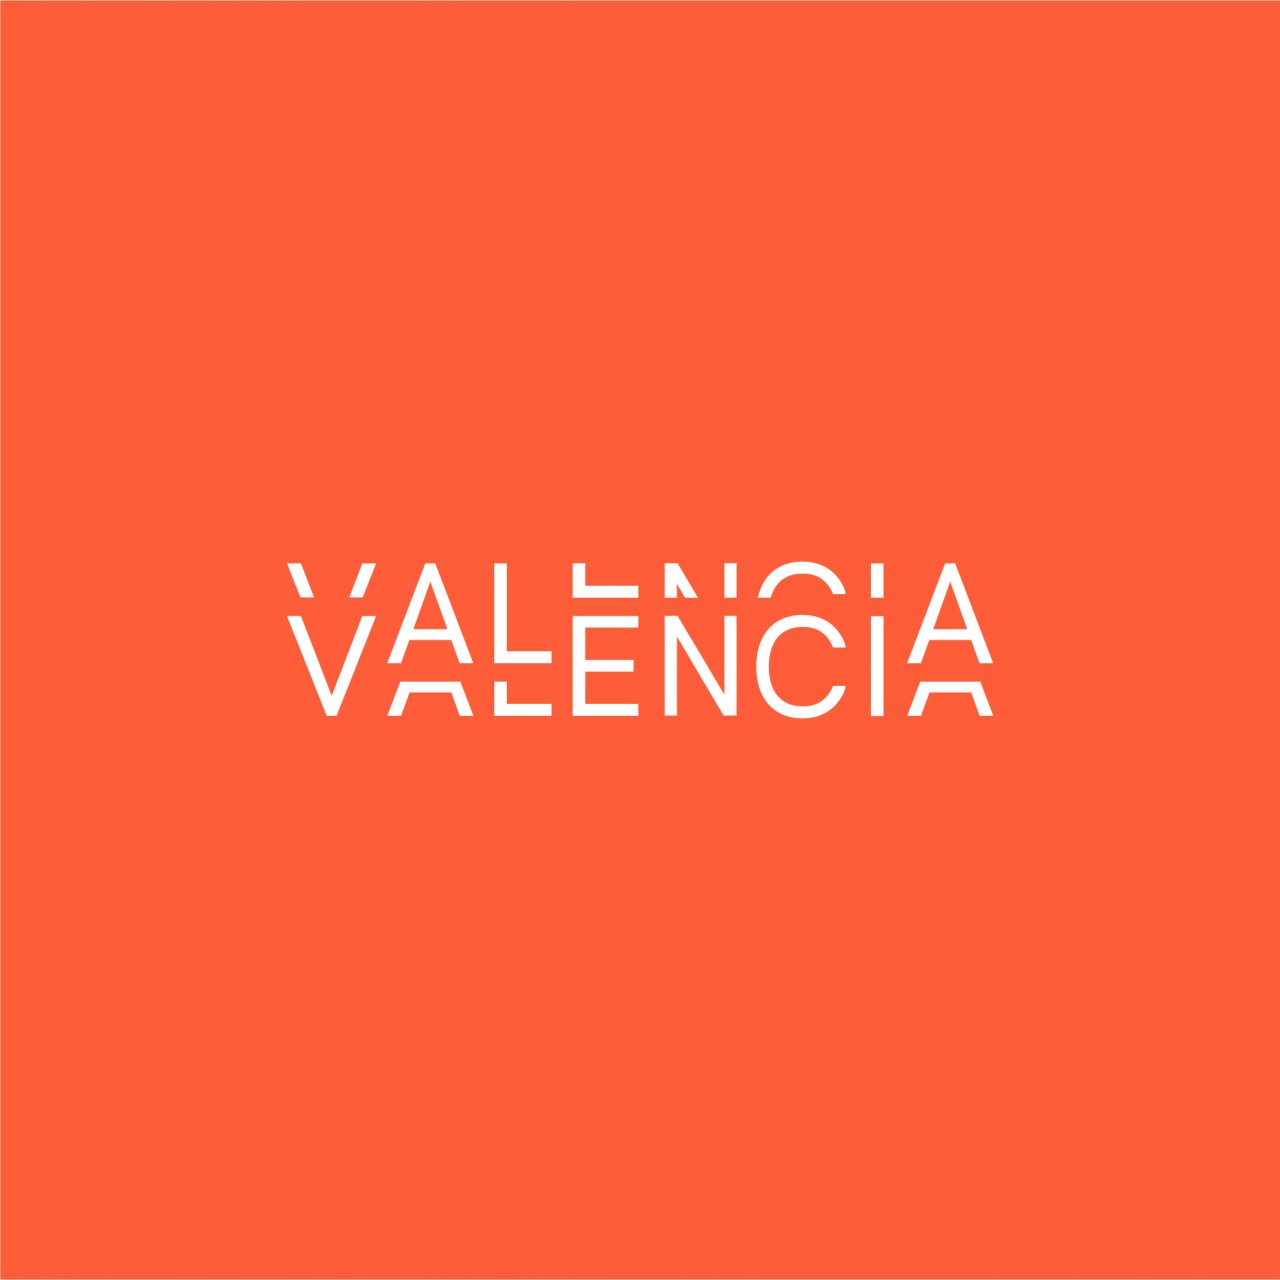 Valencia Tourist Brand